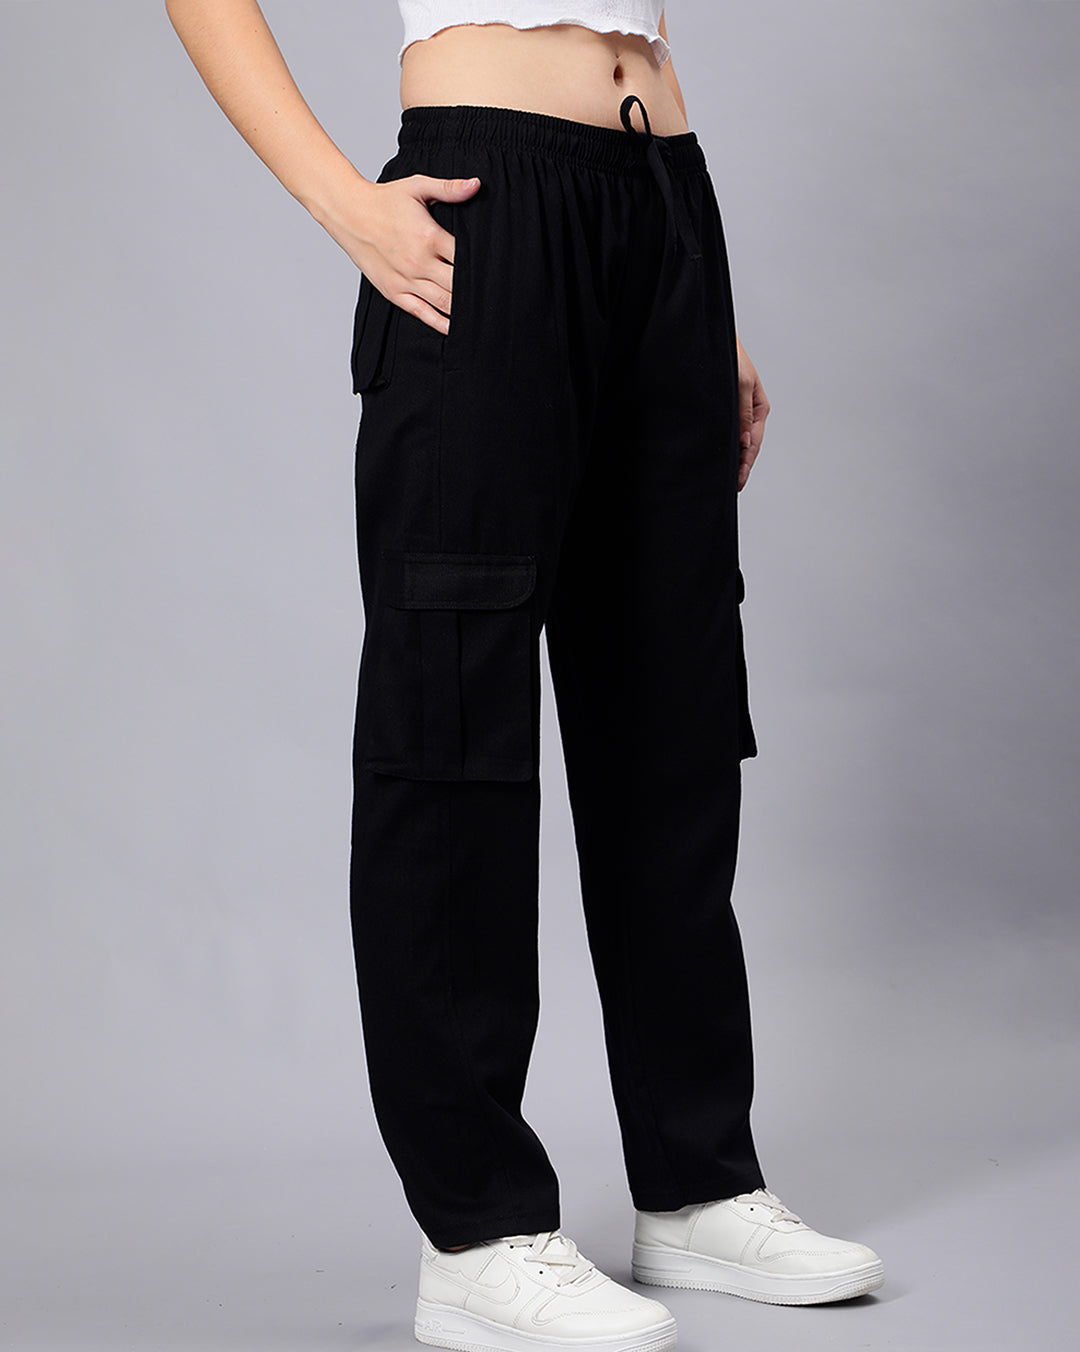 Black and white, cargo pants, women, wide-leg casual | eBay